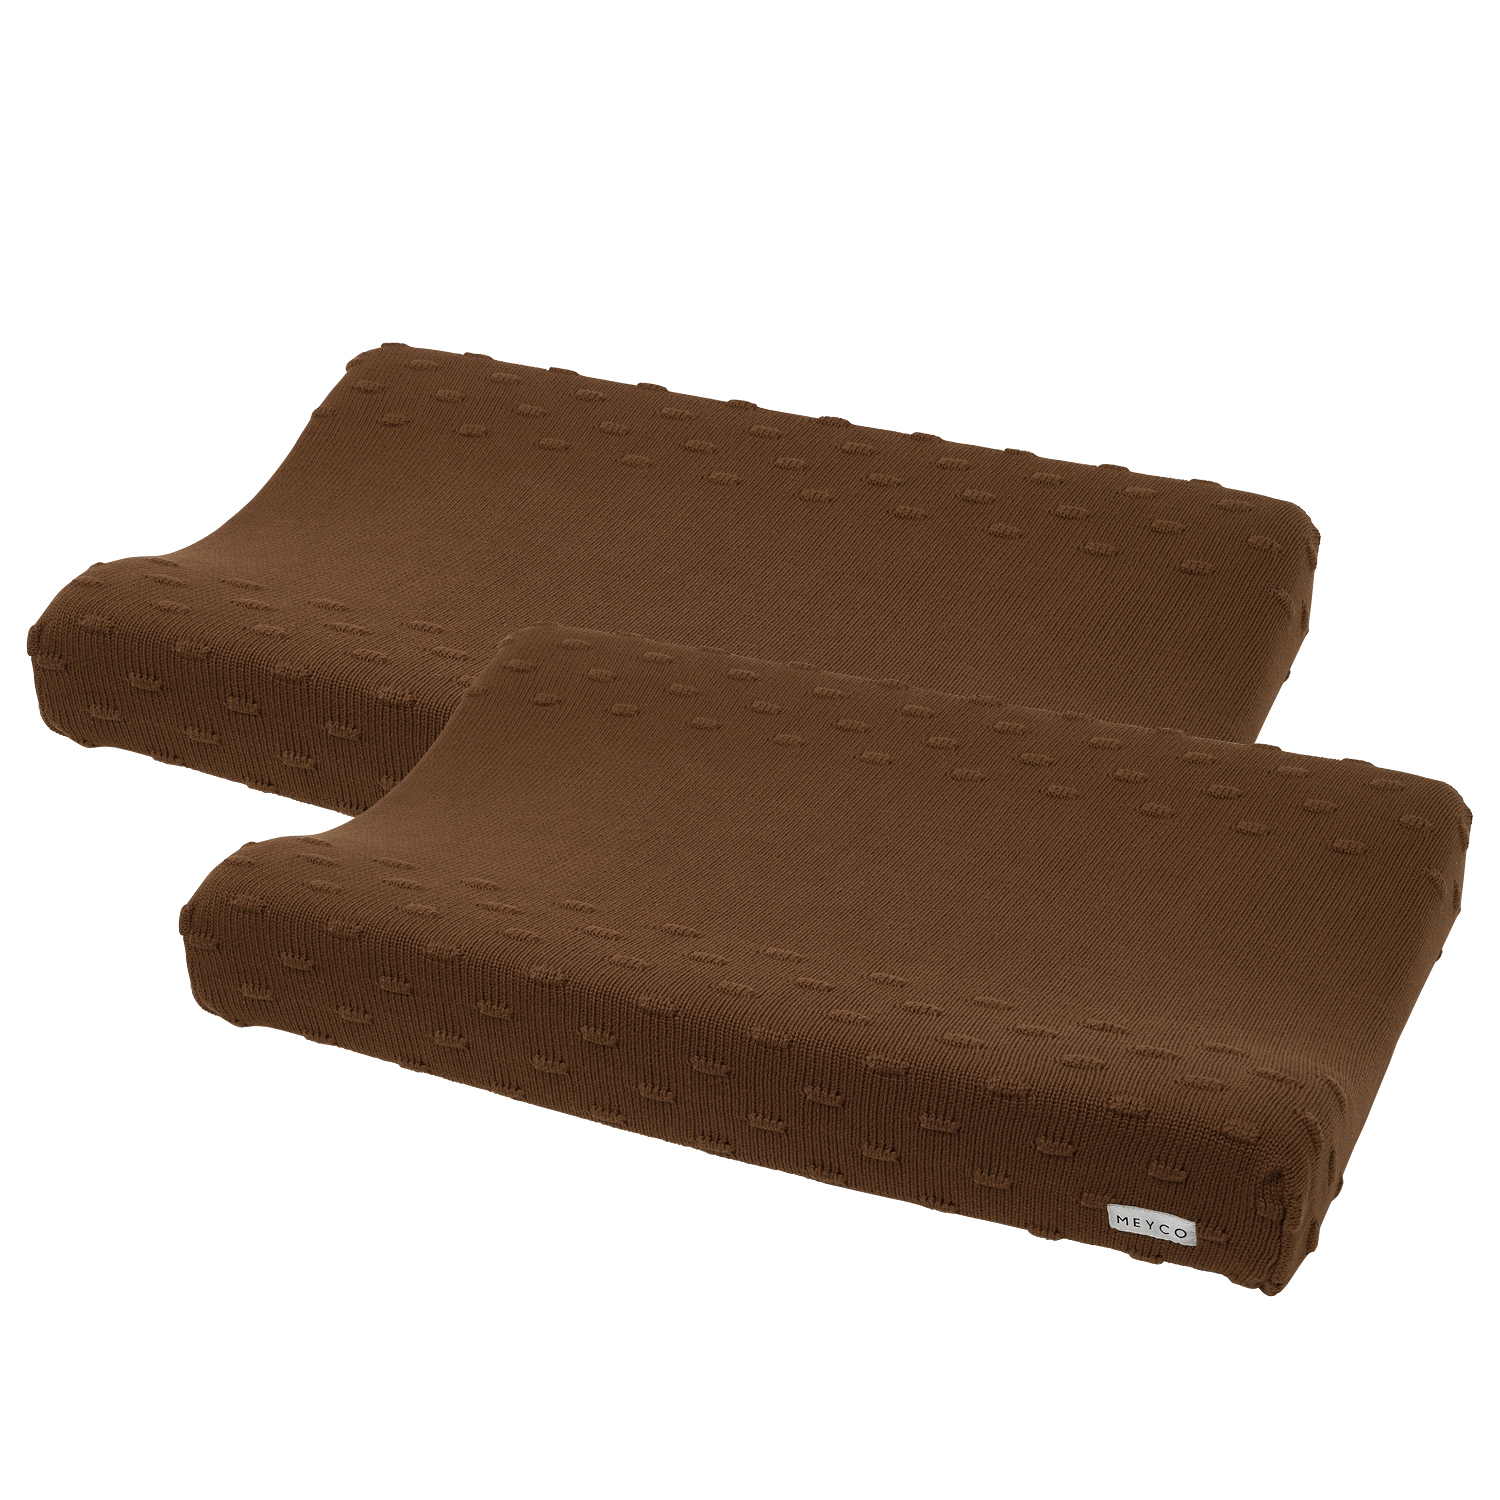 Wickelauflagenbezug 2er pack Knots - chocolate - 50x70cm